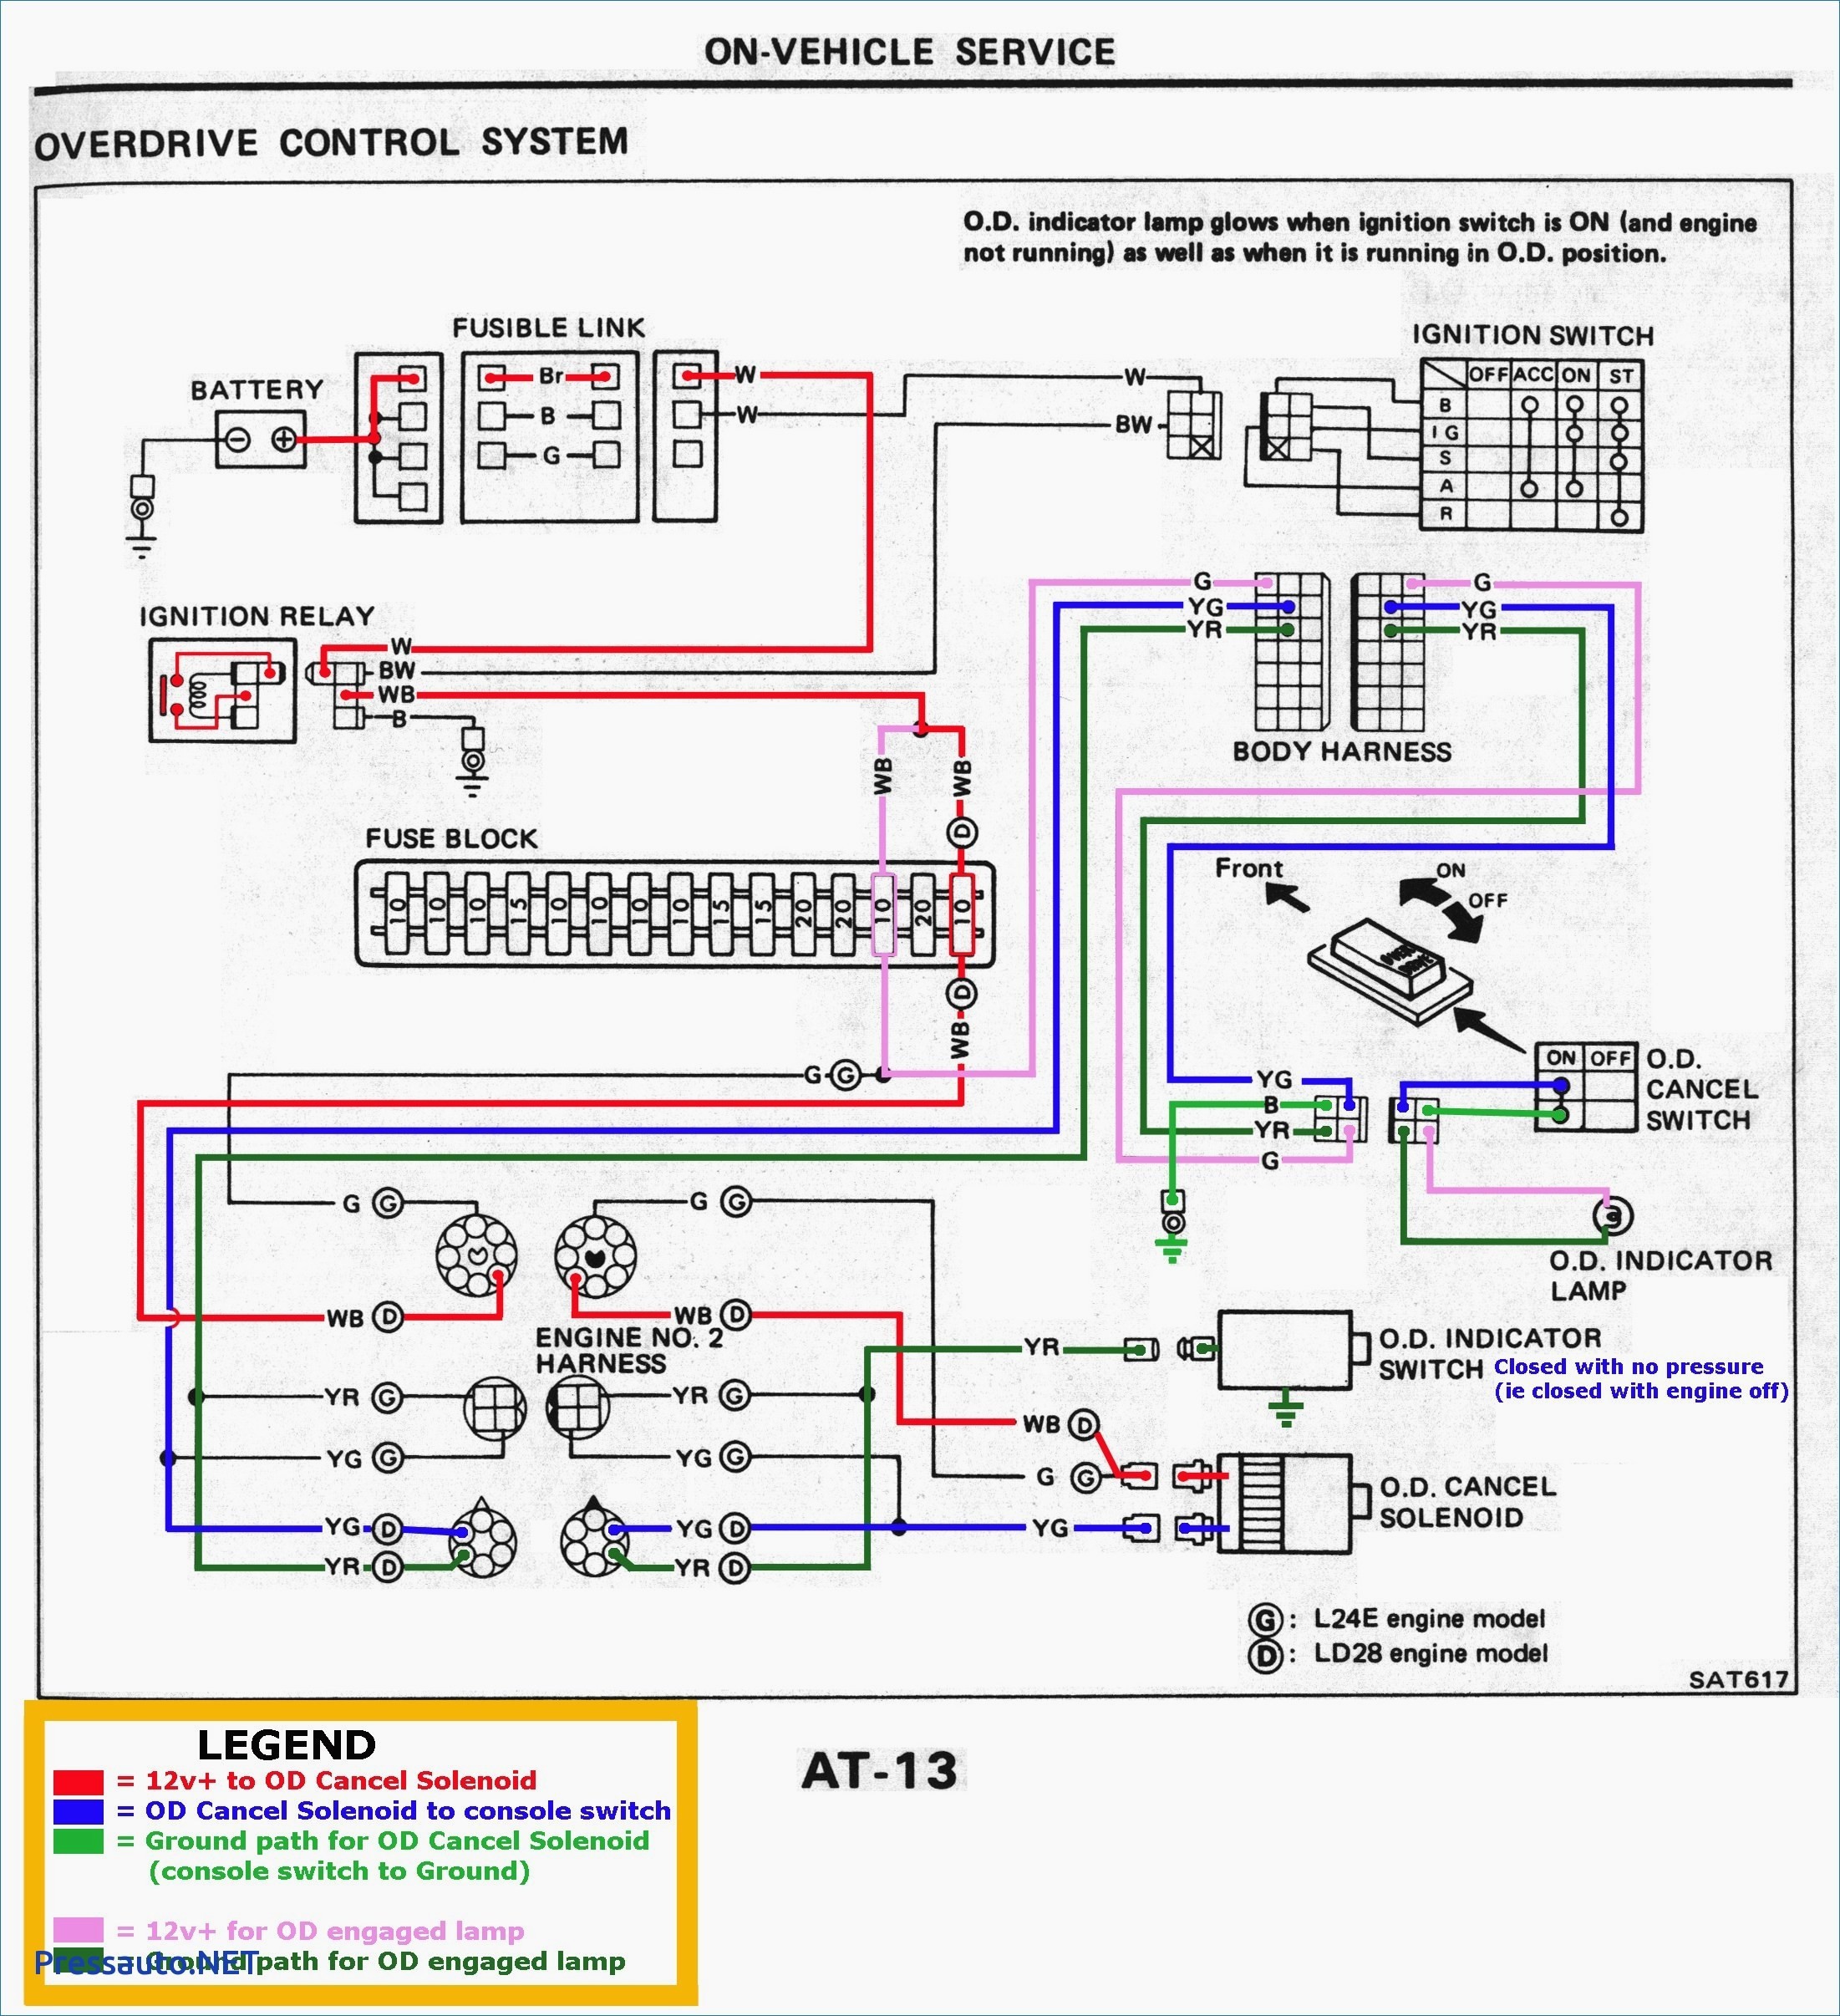 John Deere Wiring Diagrams New Wiring Diagram For John Deere Gator 64 Fresh John Deere Wiring